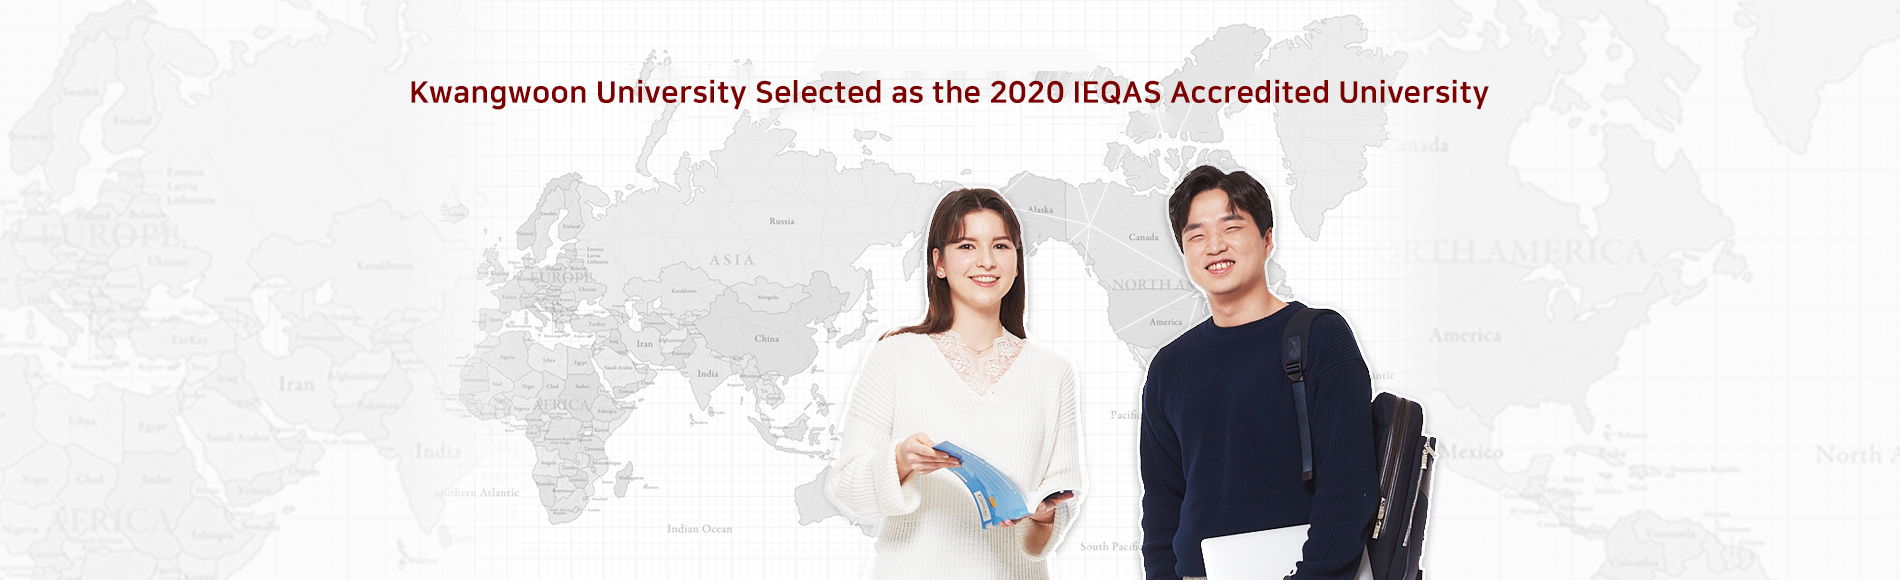 Kwangwook University Selected as the 2020 IEQAS Accredited University photo